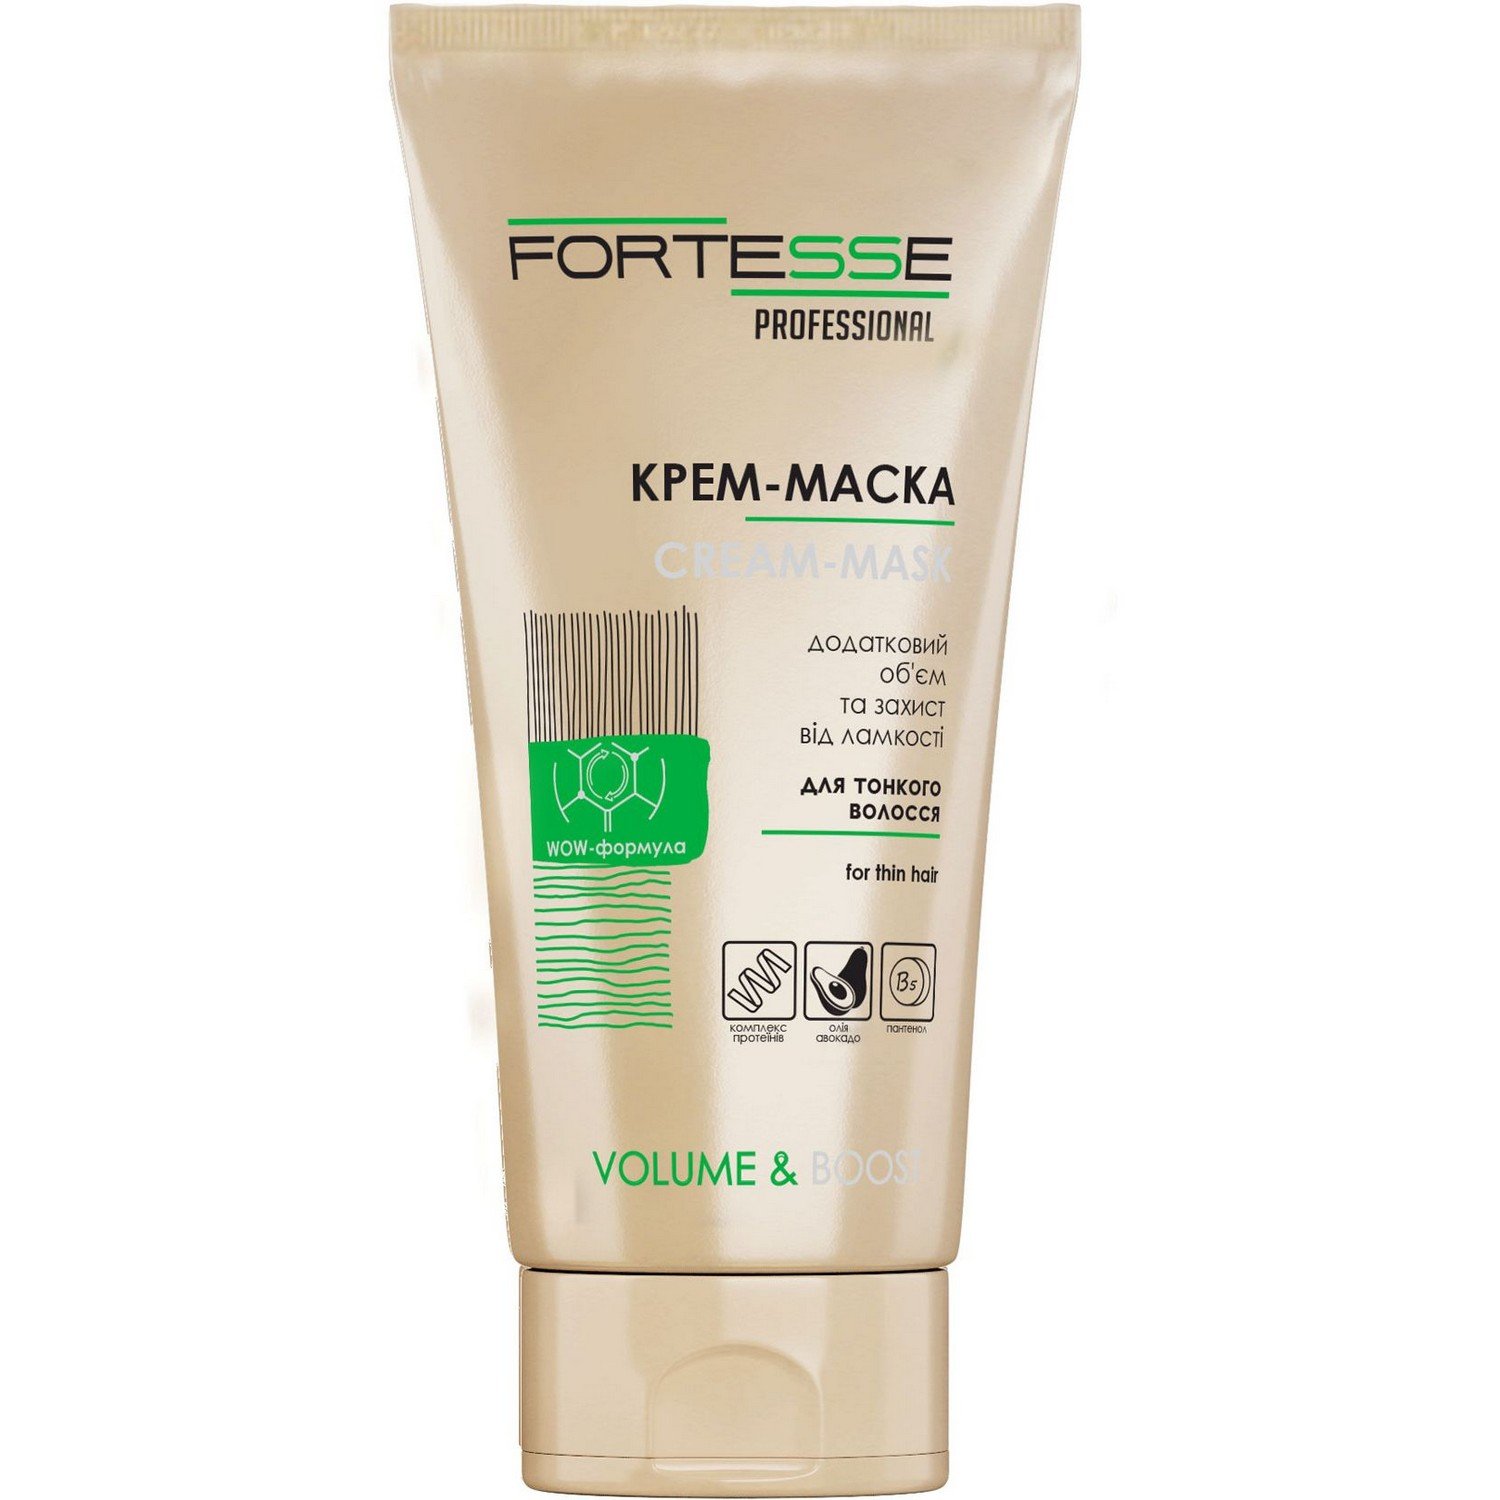 Маска-крем Fortesse Professional Volume & Boost Объем, для тонких волос, 200 мл - фото 1